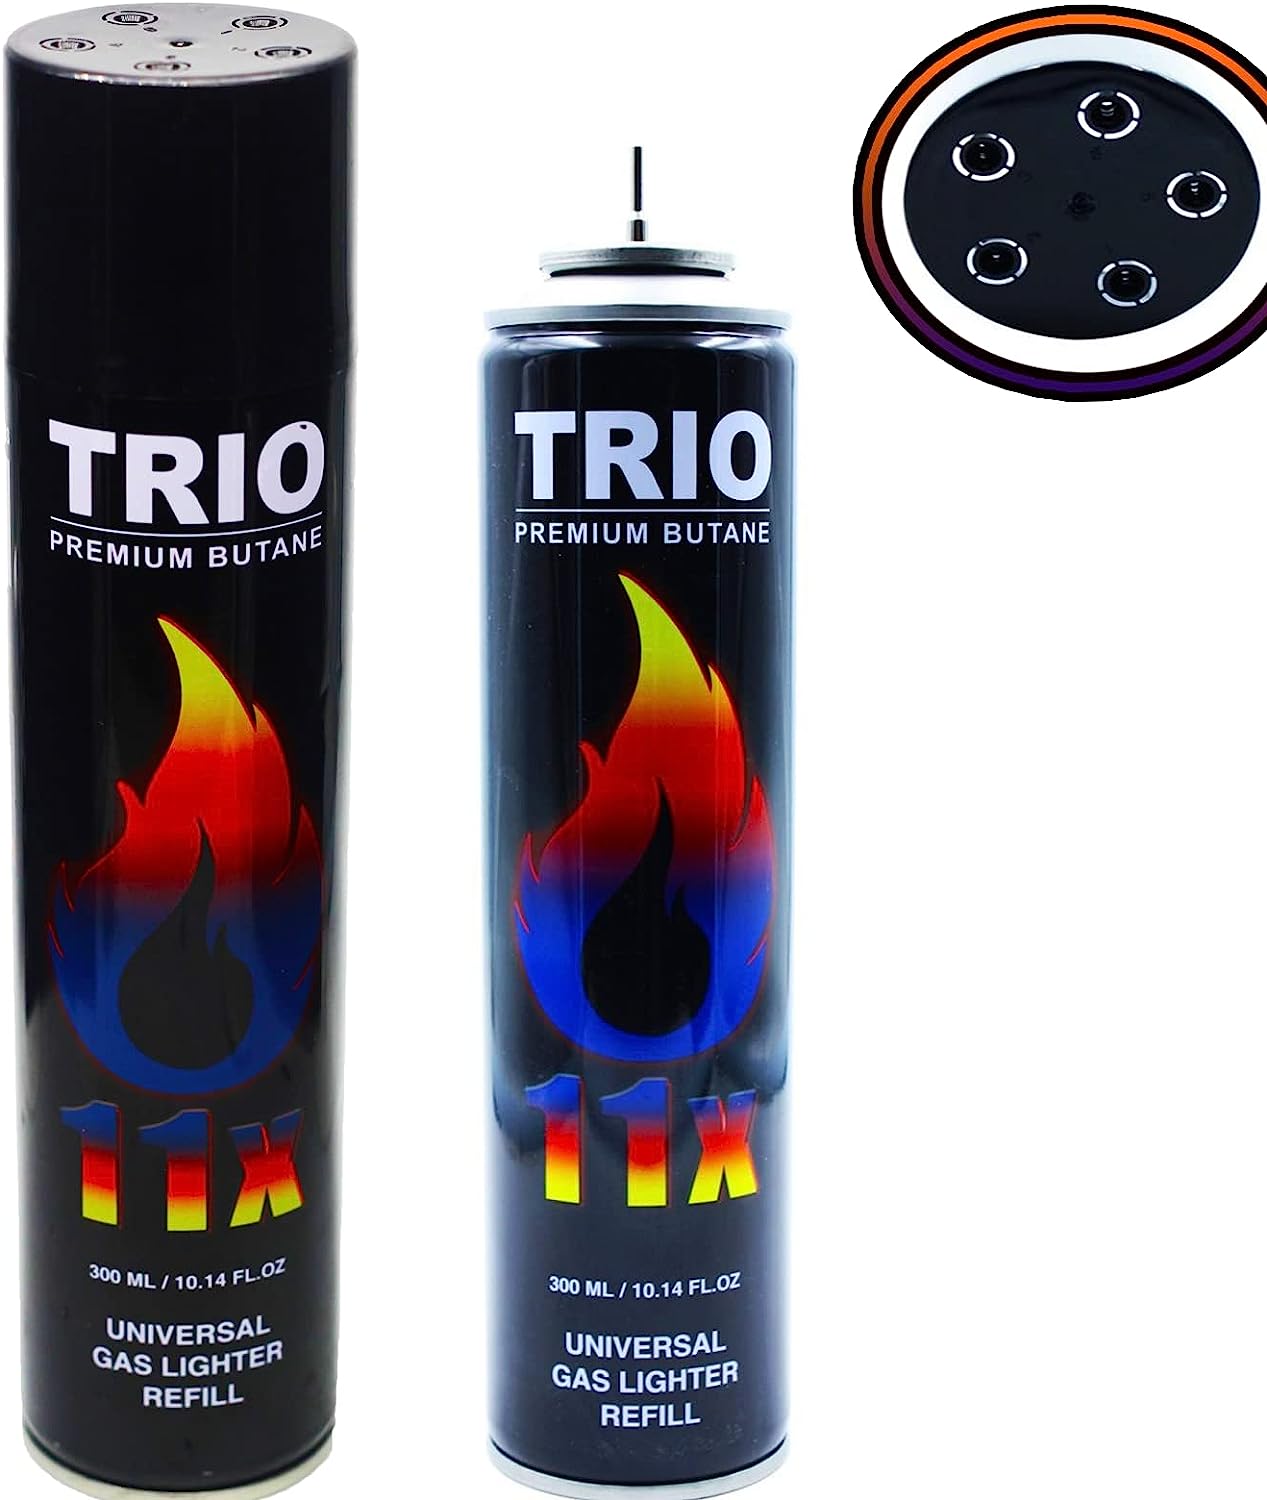 Trio Premium Refined Butane Gas Bottle Refill Lighter Refill 11 X TIMES REFINED 300ml - Homeware Discounts